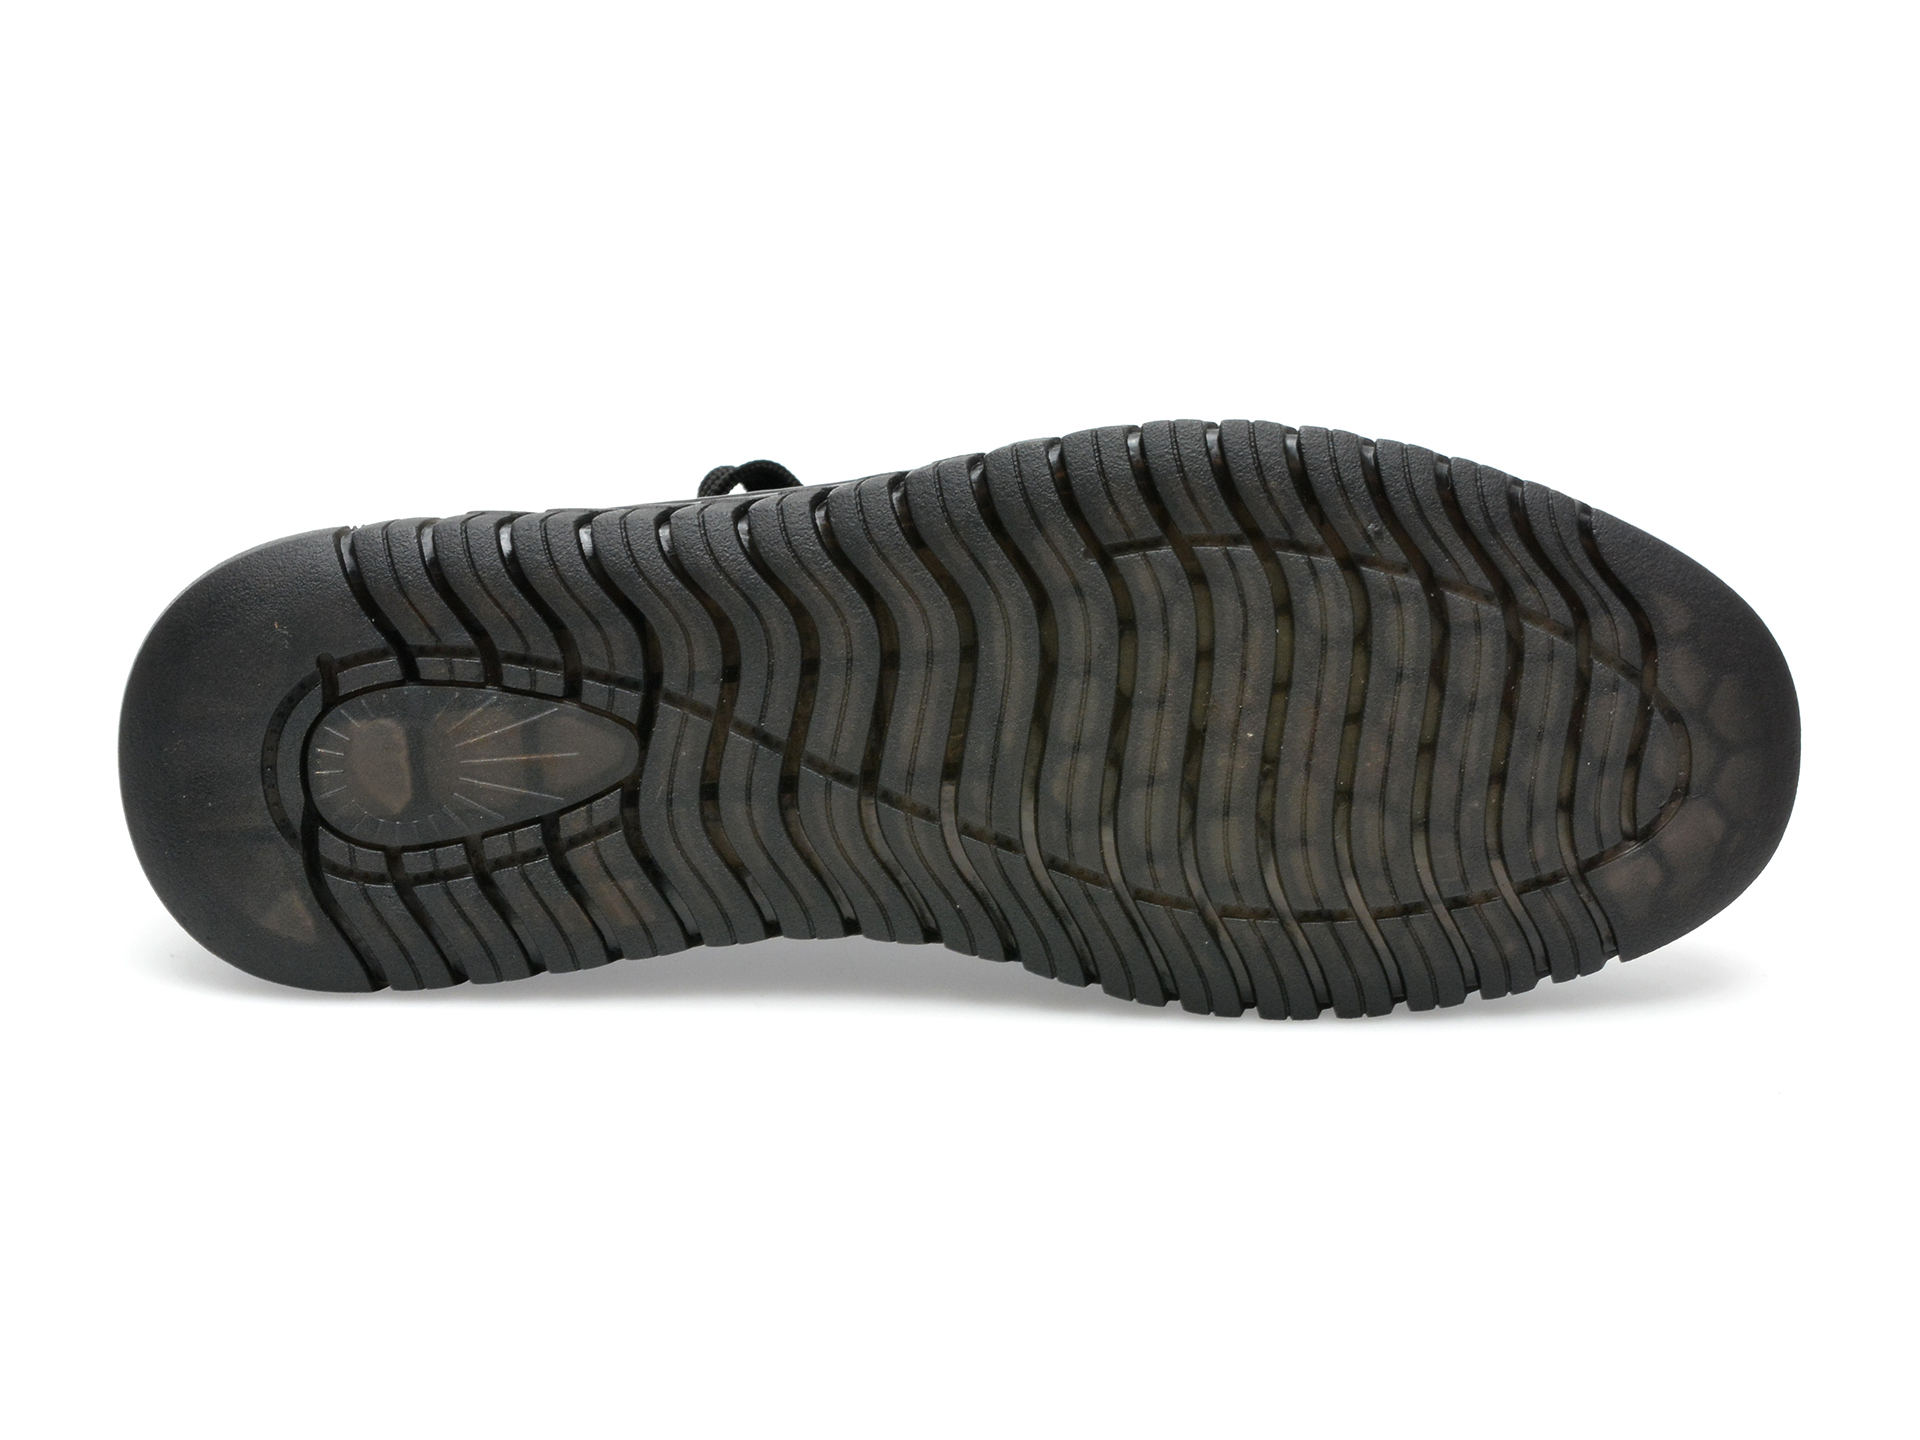 Pantofi OTTER negri, RE20012, din piele naturala